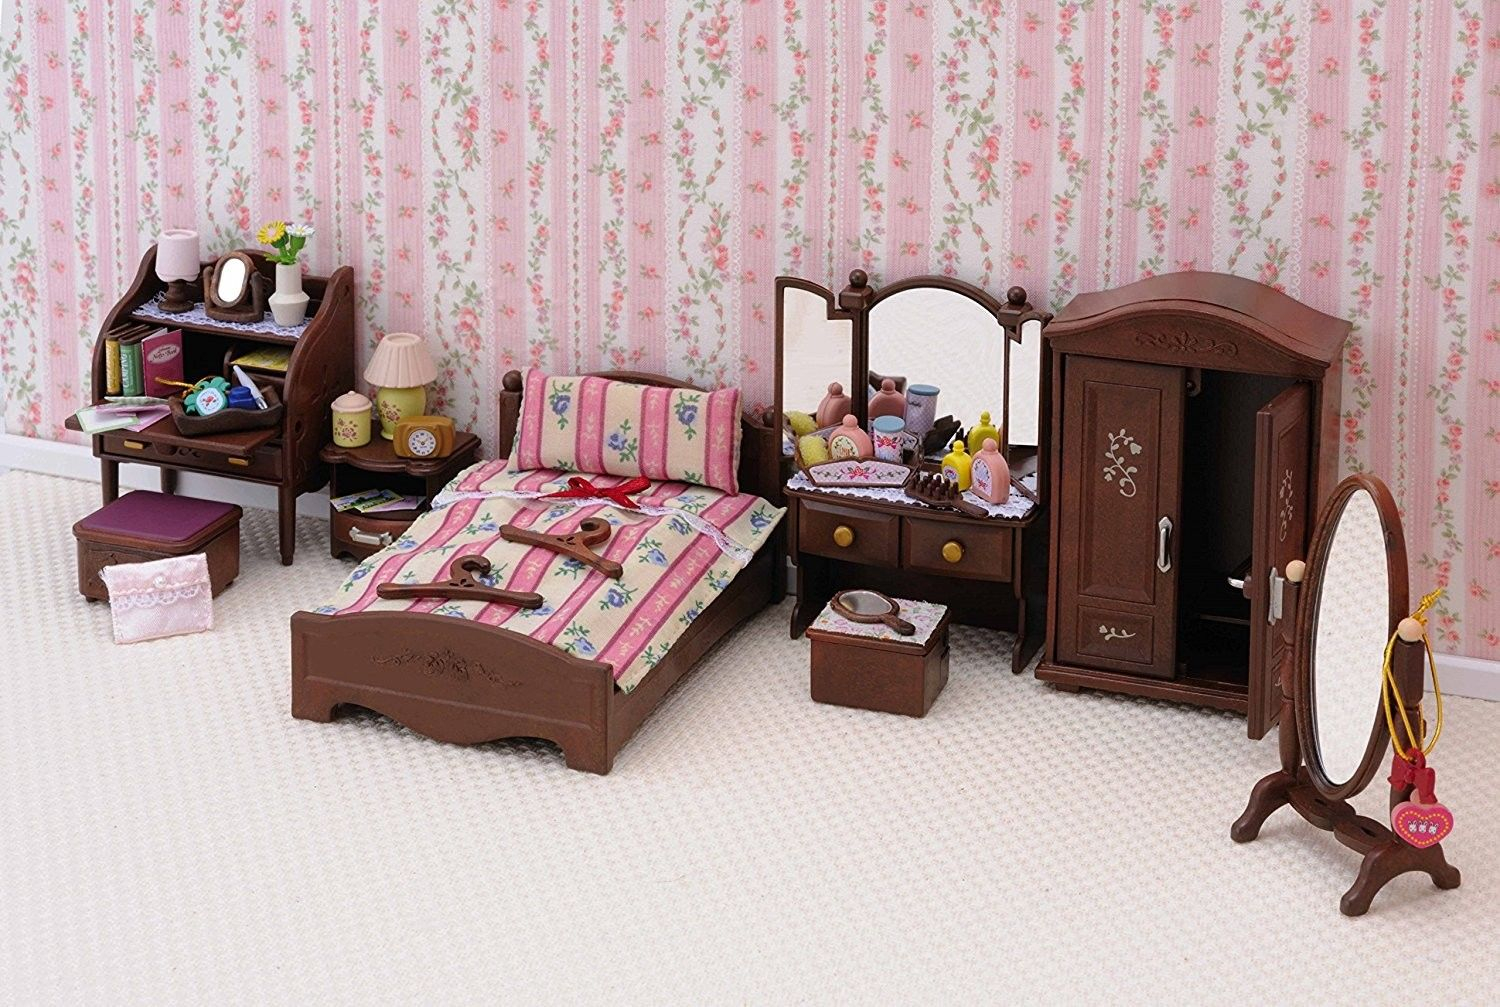 sylvanian families luxury master bedroom furniture set